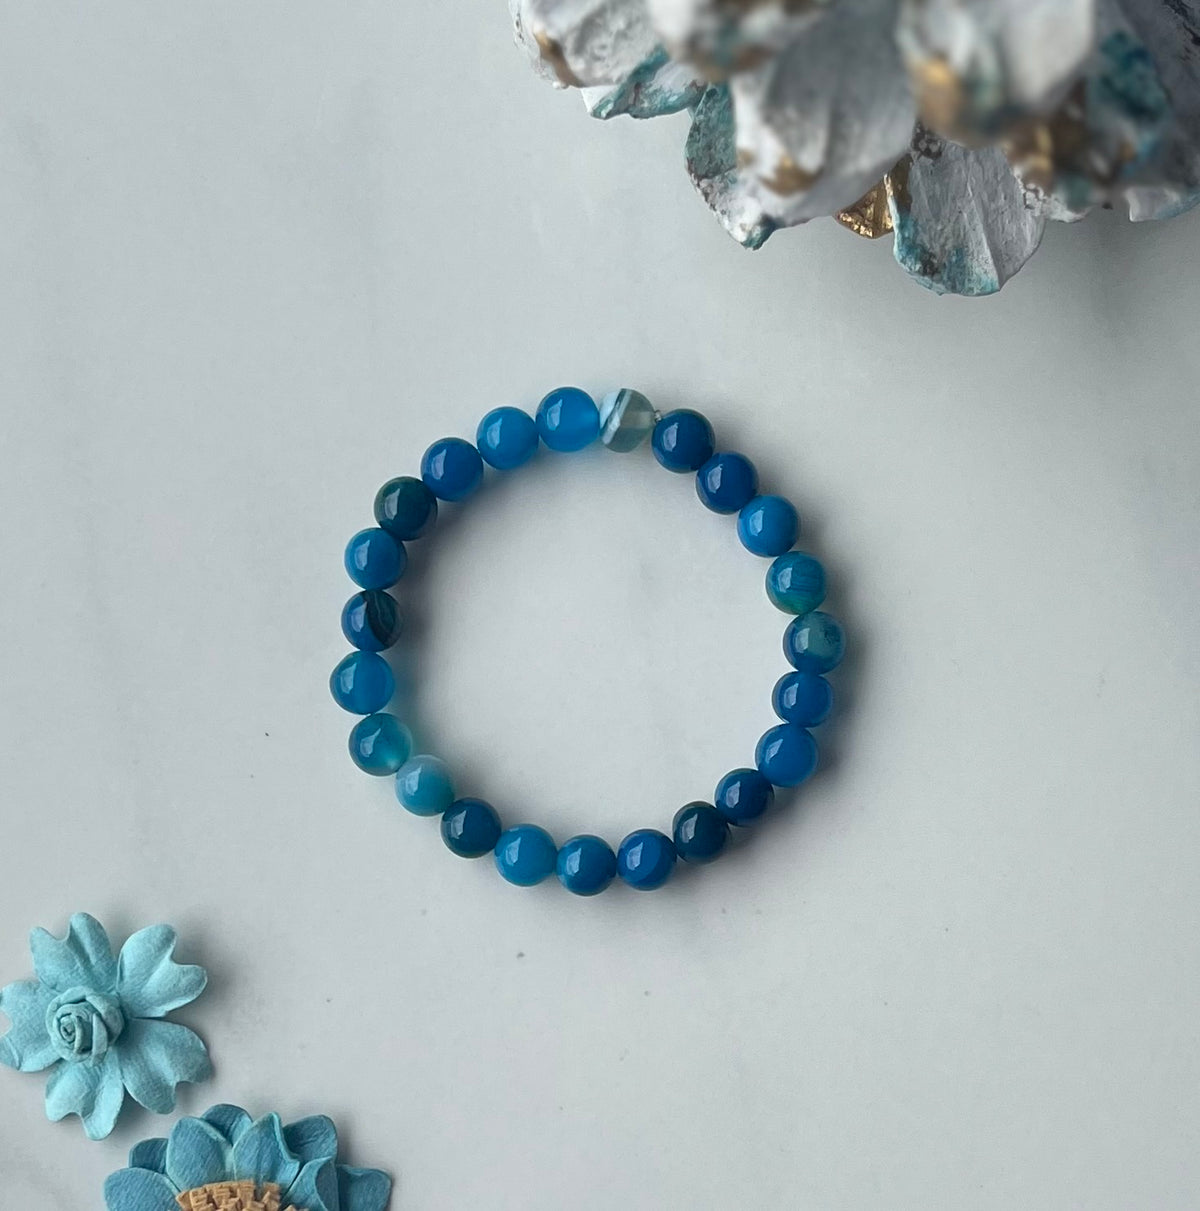 8mm bead blue agate bracelet